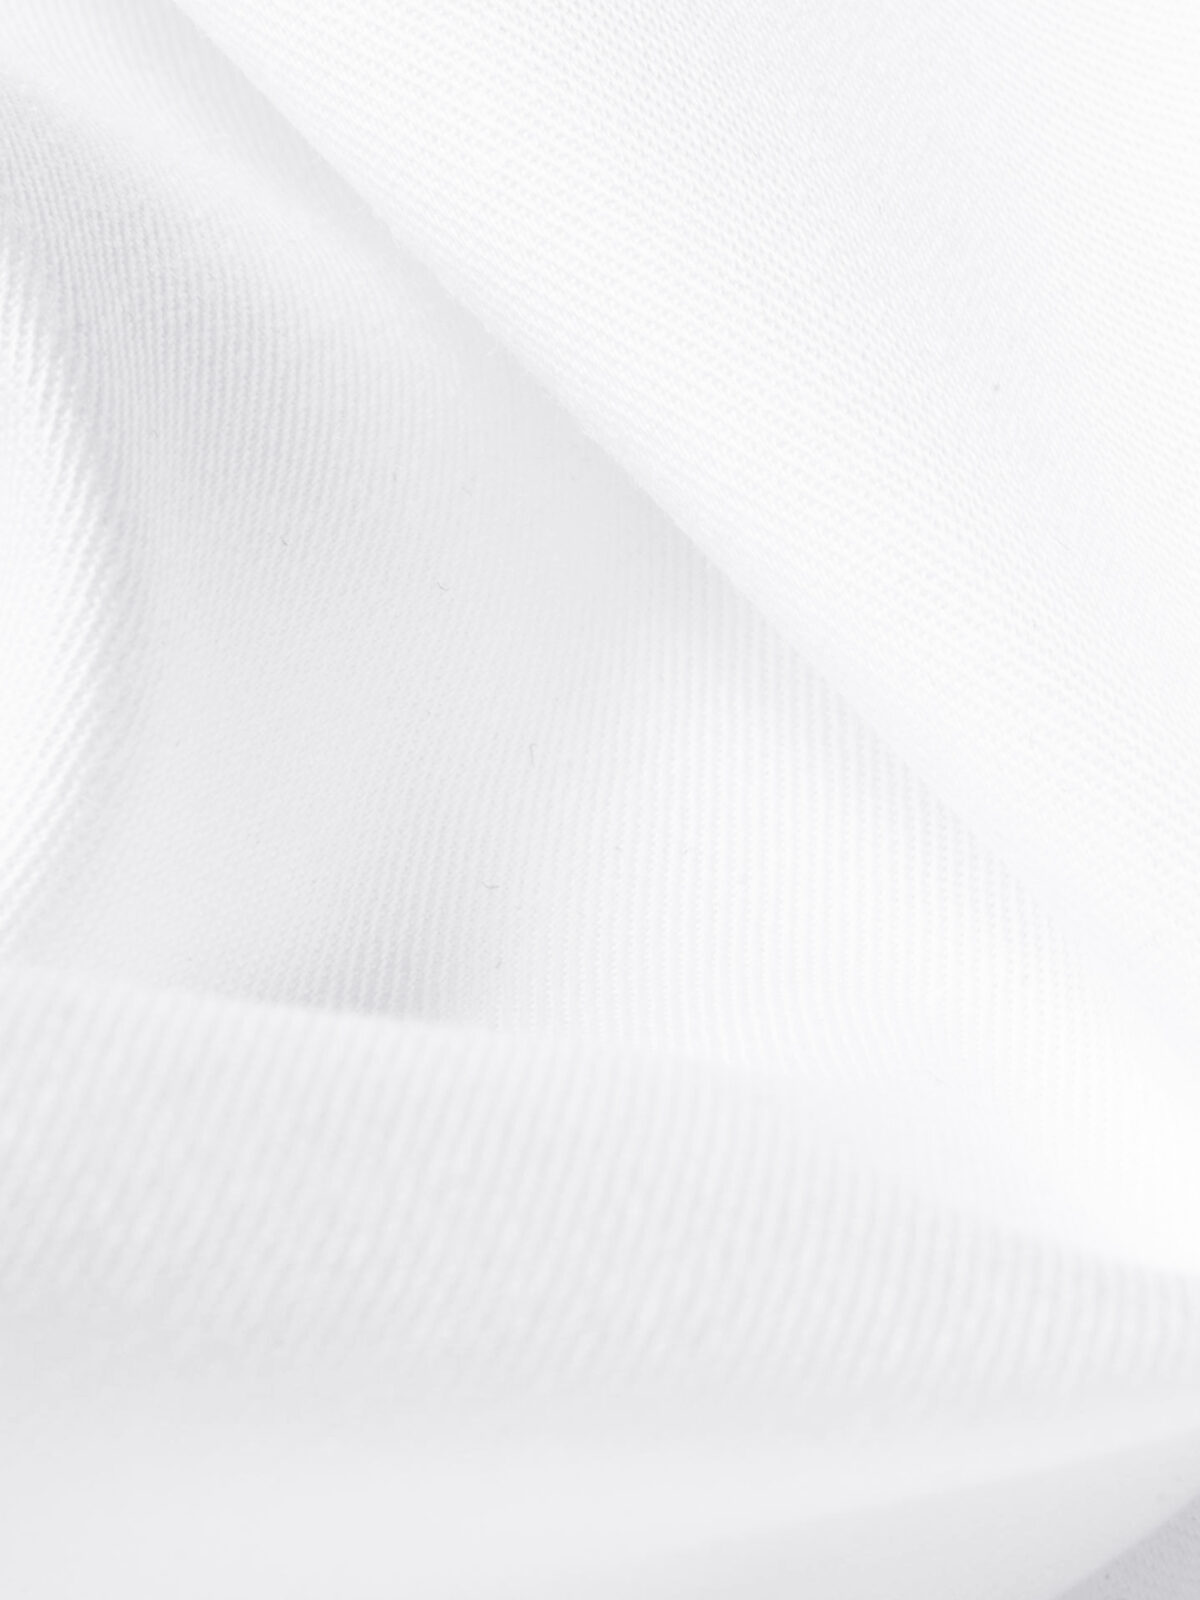 White 170s Twill Shirts by Proper Cloth